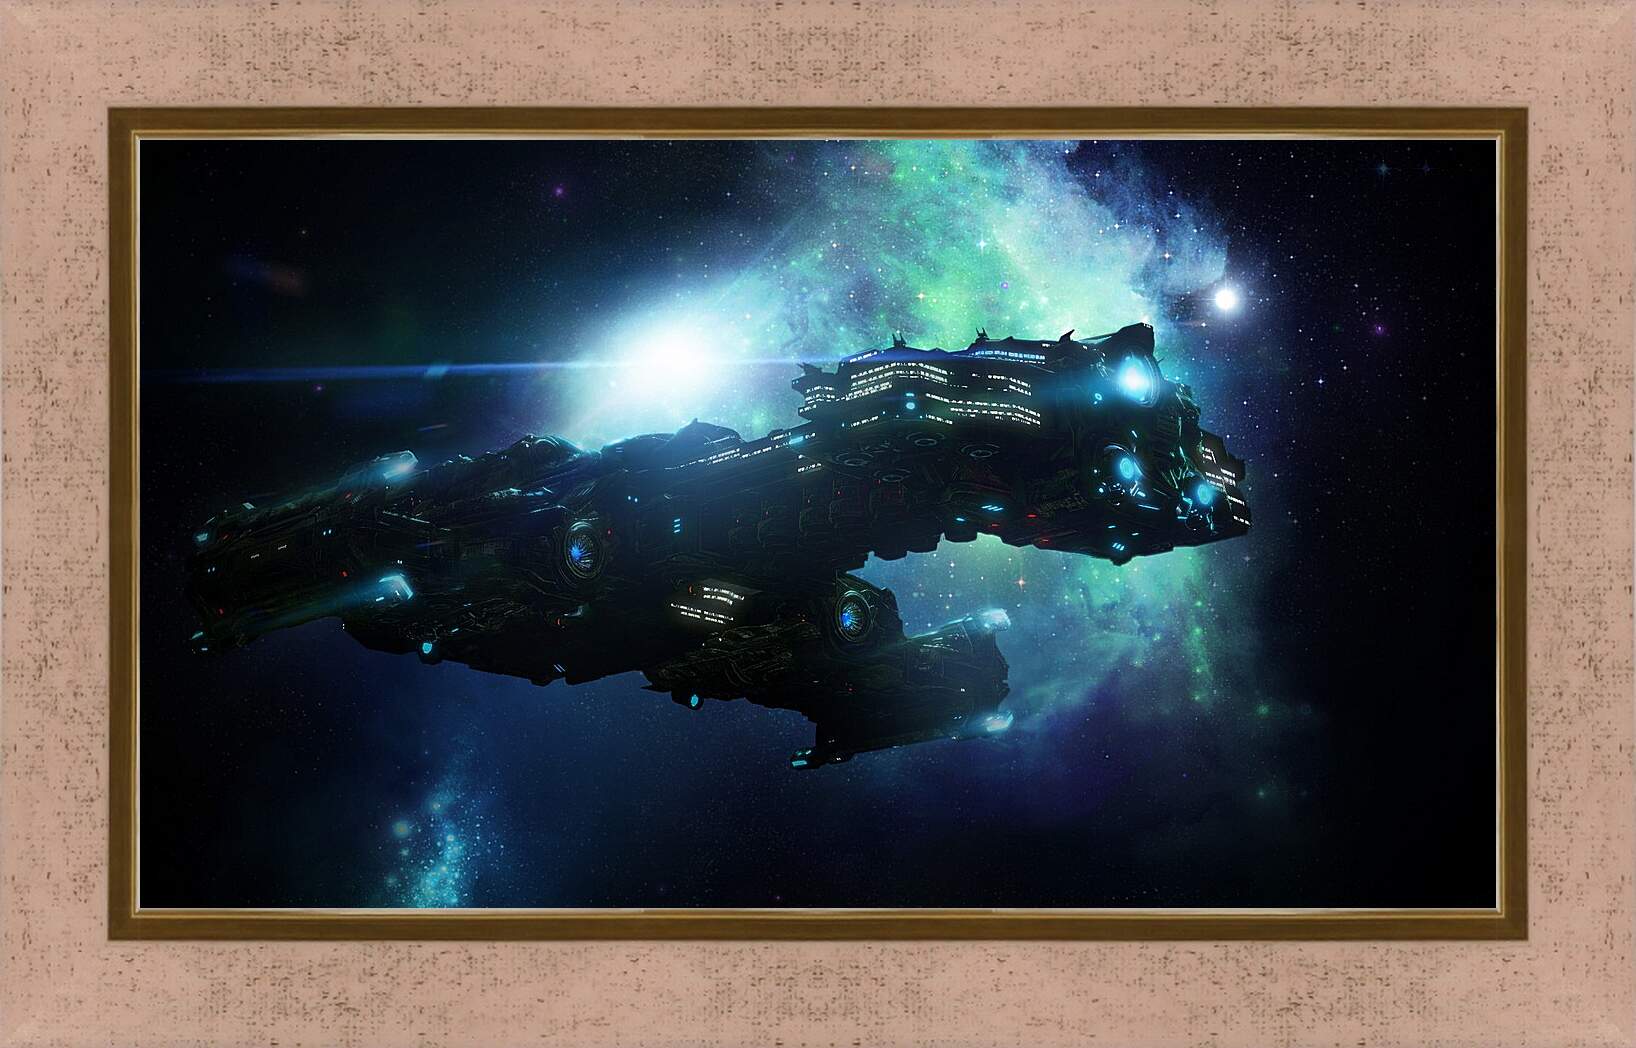 Картина в раме - Starcraft